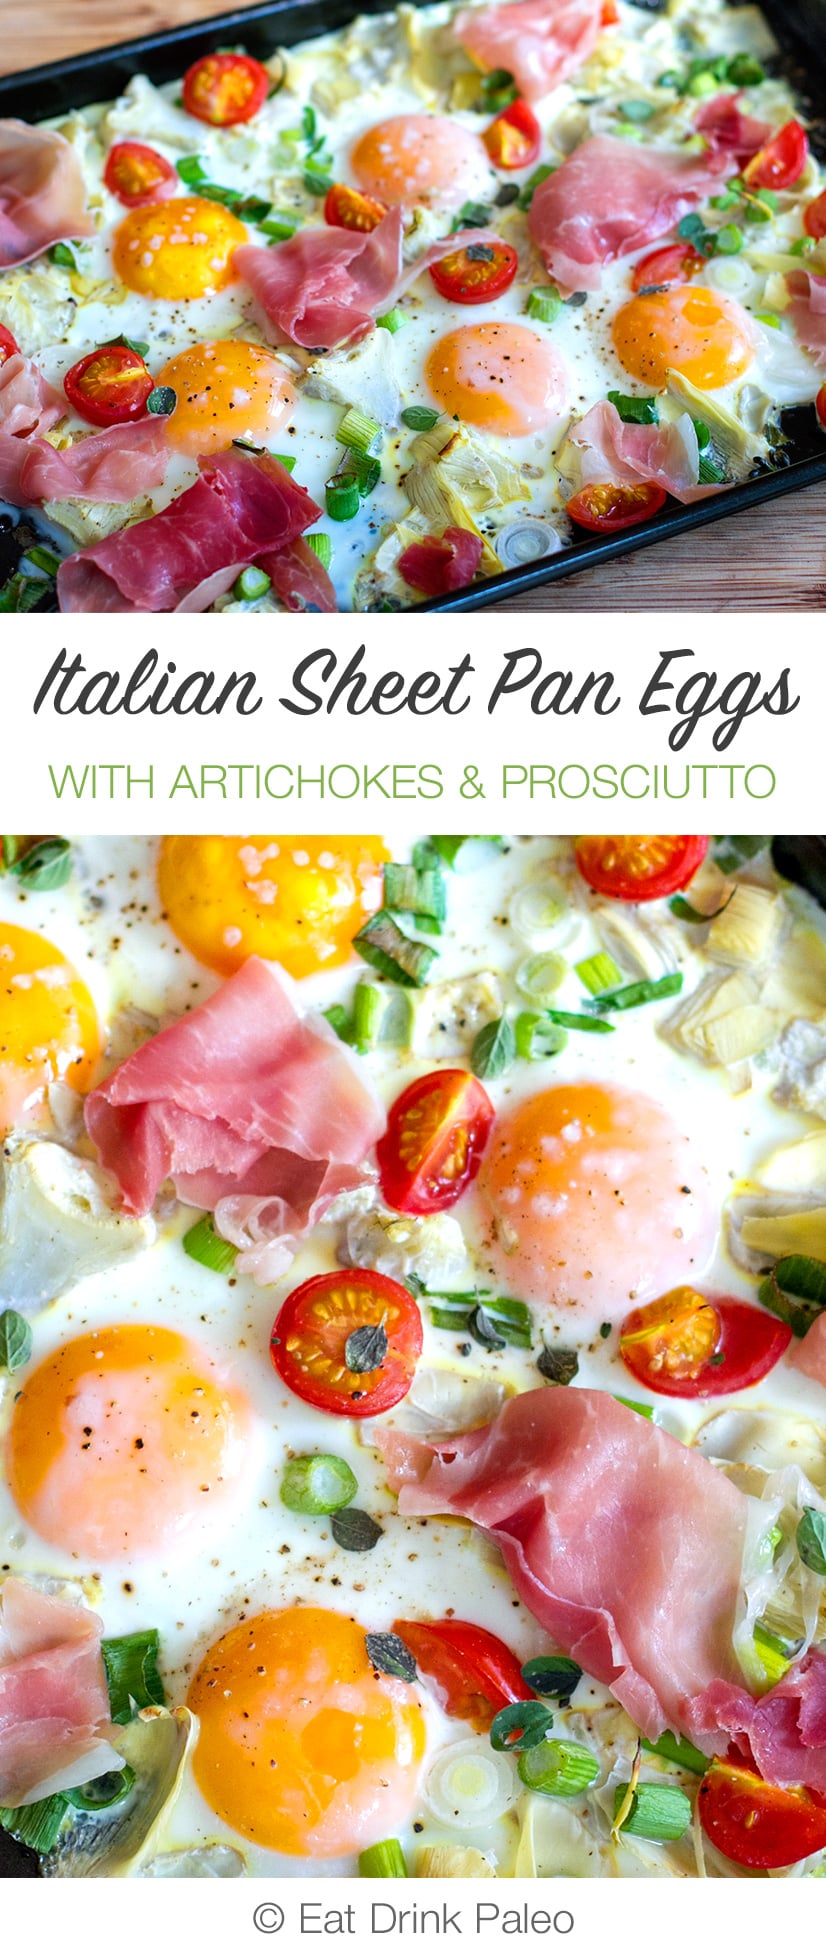 Italian Sheet Pan Eggs With Artichokes & Prosciutto